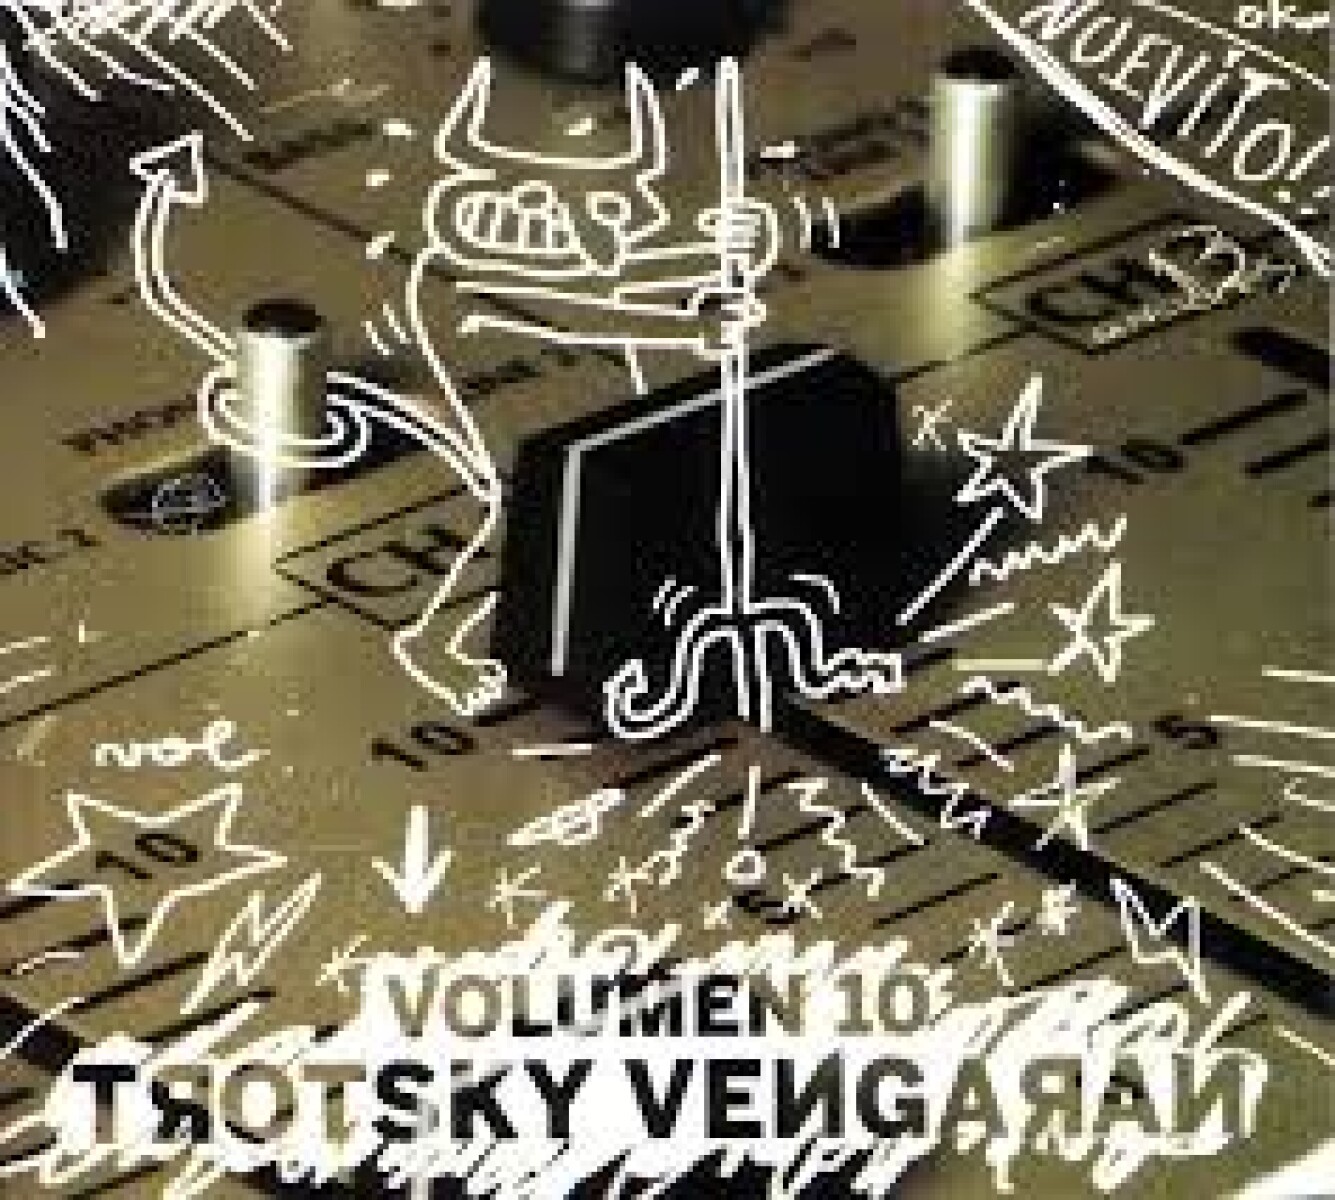 Trotsky Vengaran-volumen 10 - Cd 